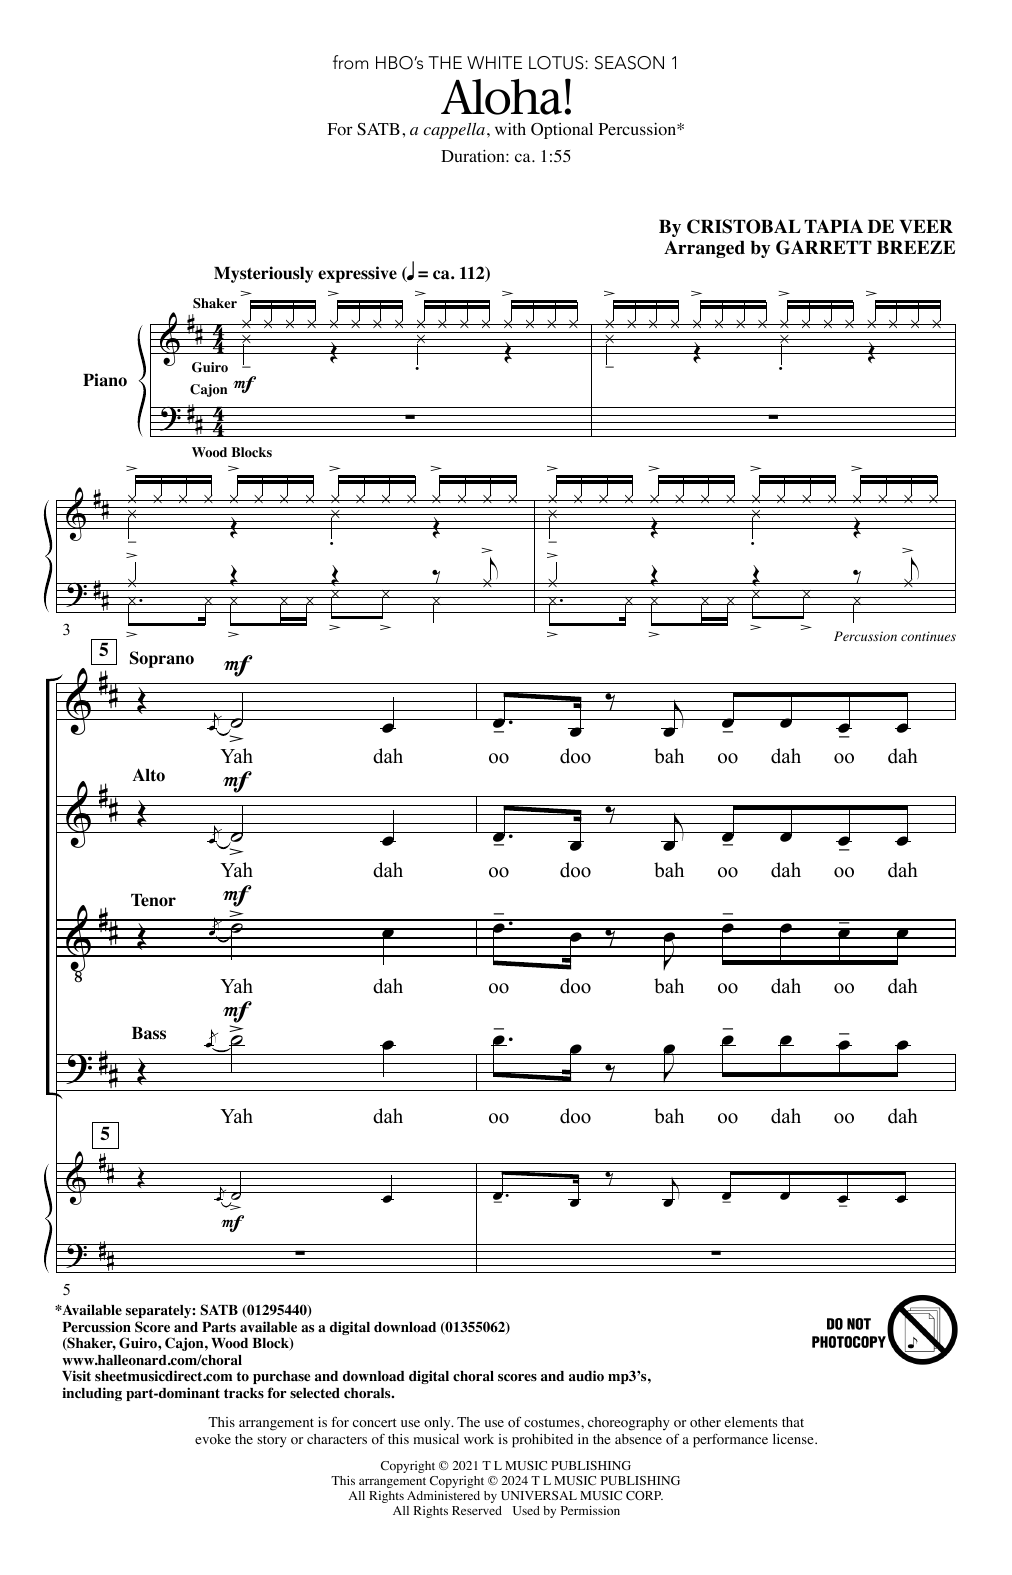 Download Cristobal Tapia de Veer Aloha! (arr. Garrett Breeze) Sheet Music and learn how to play SATB Choir PDF digital score in minutes